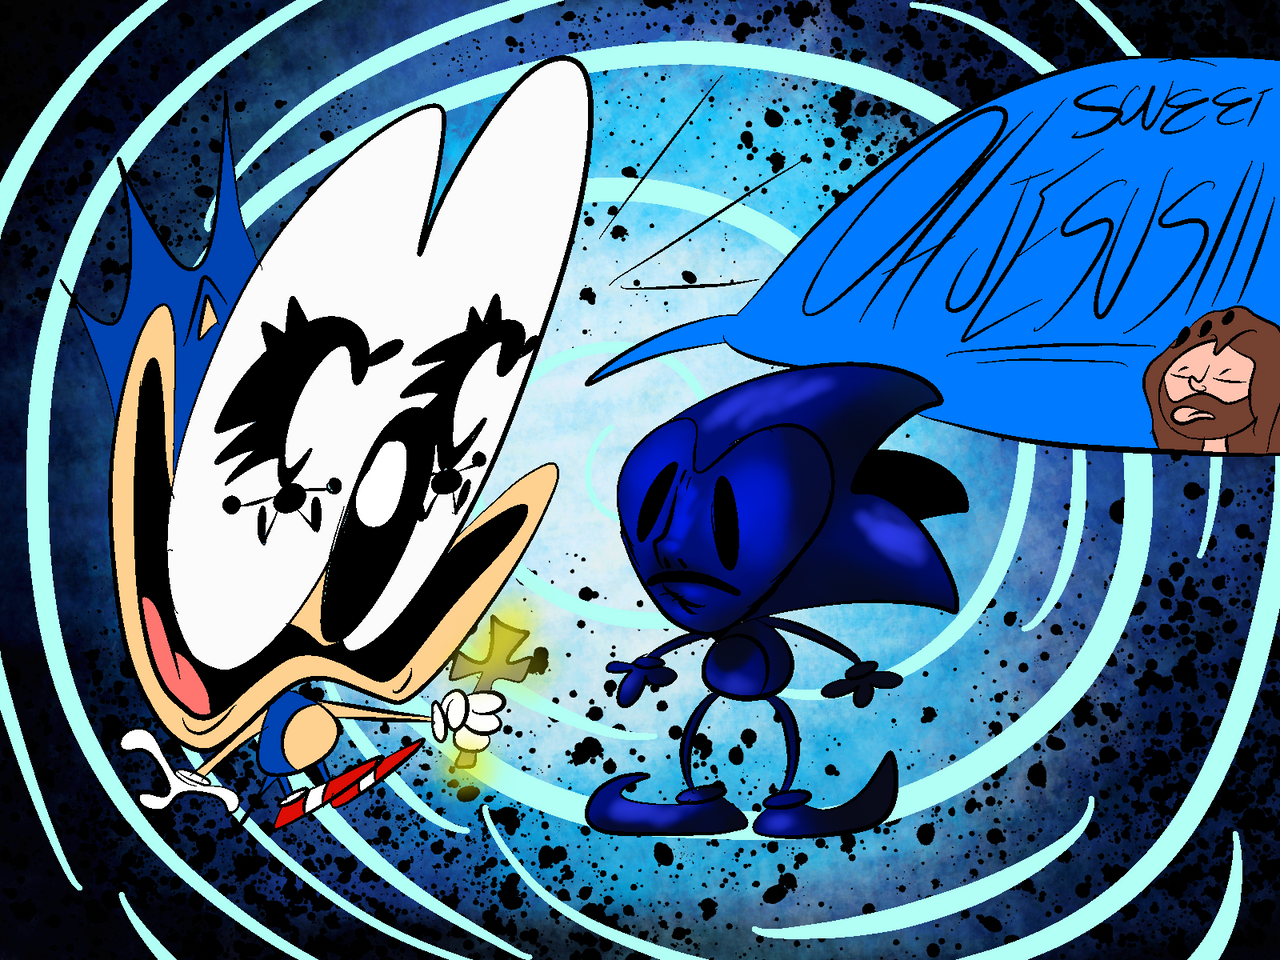 Majin Sonic by kidveal on Sketchers United